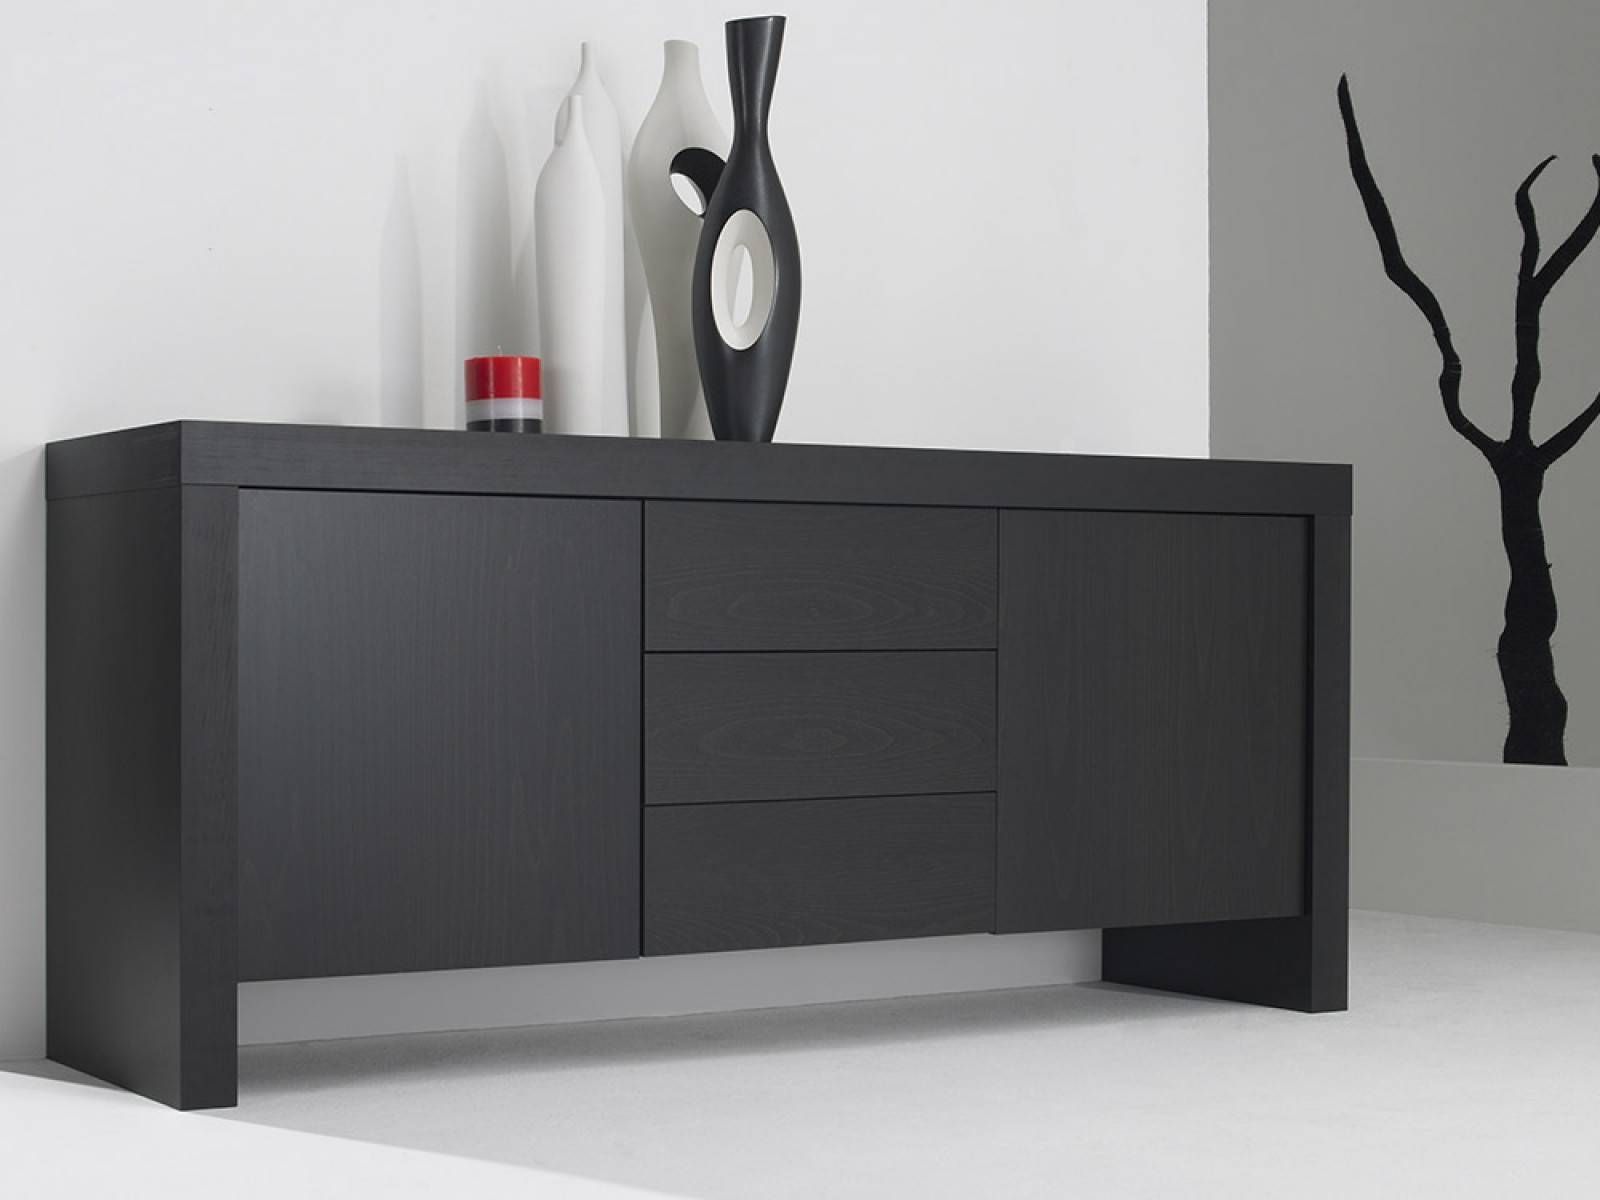 Tremendous Modern Dark Grey Sideboard Design With Two Cabinet Regarding Dark Grey Sideboard (View 3 of 20)